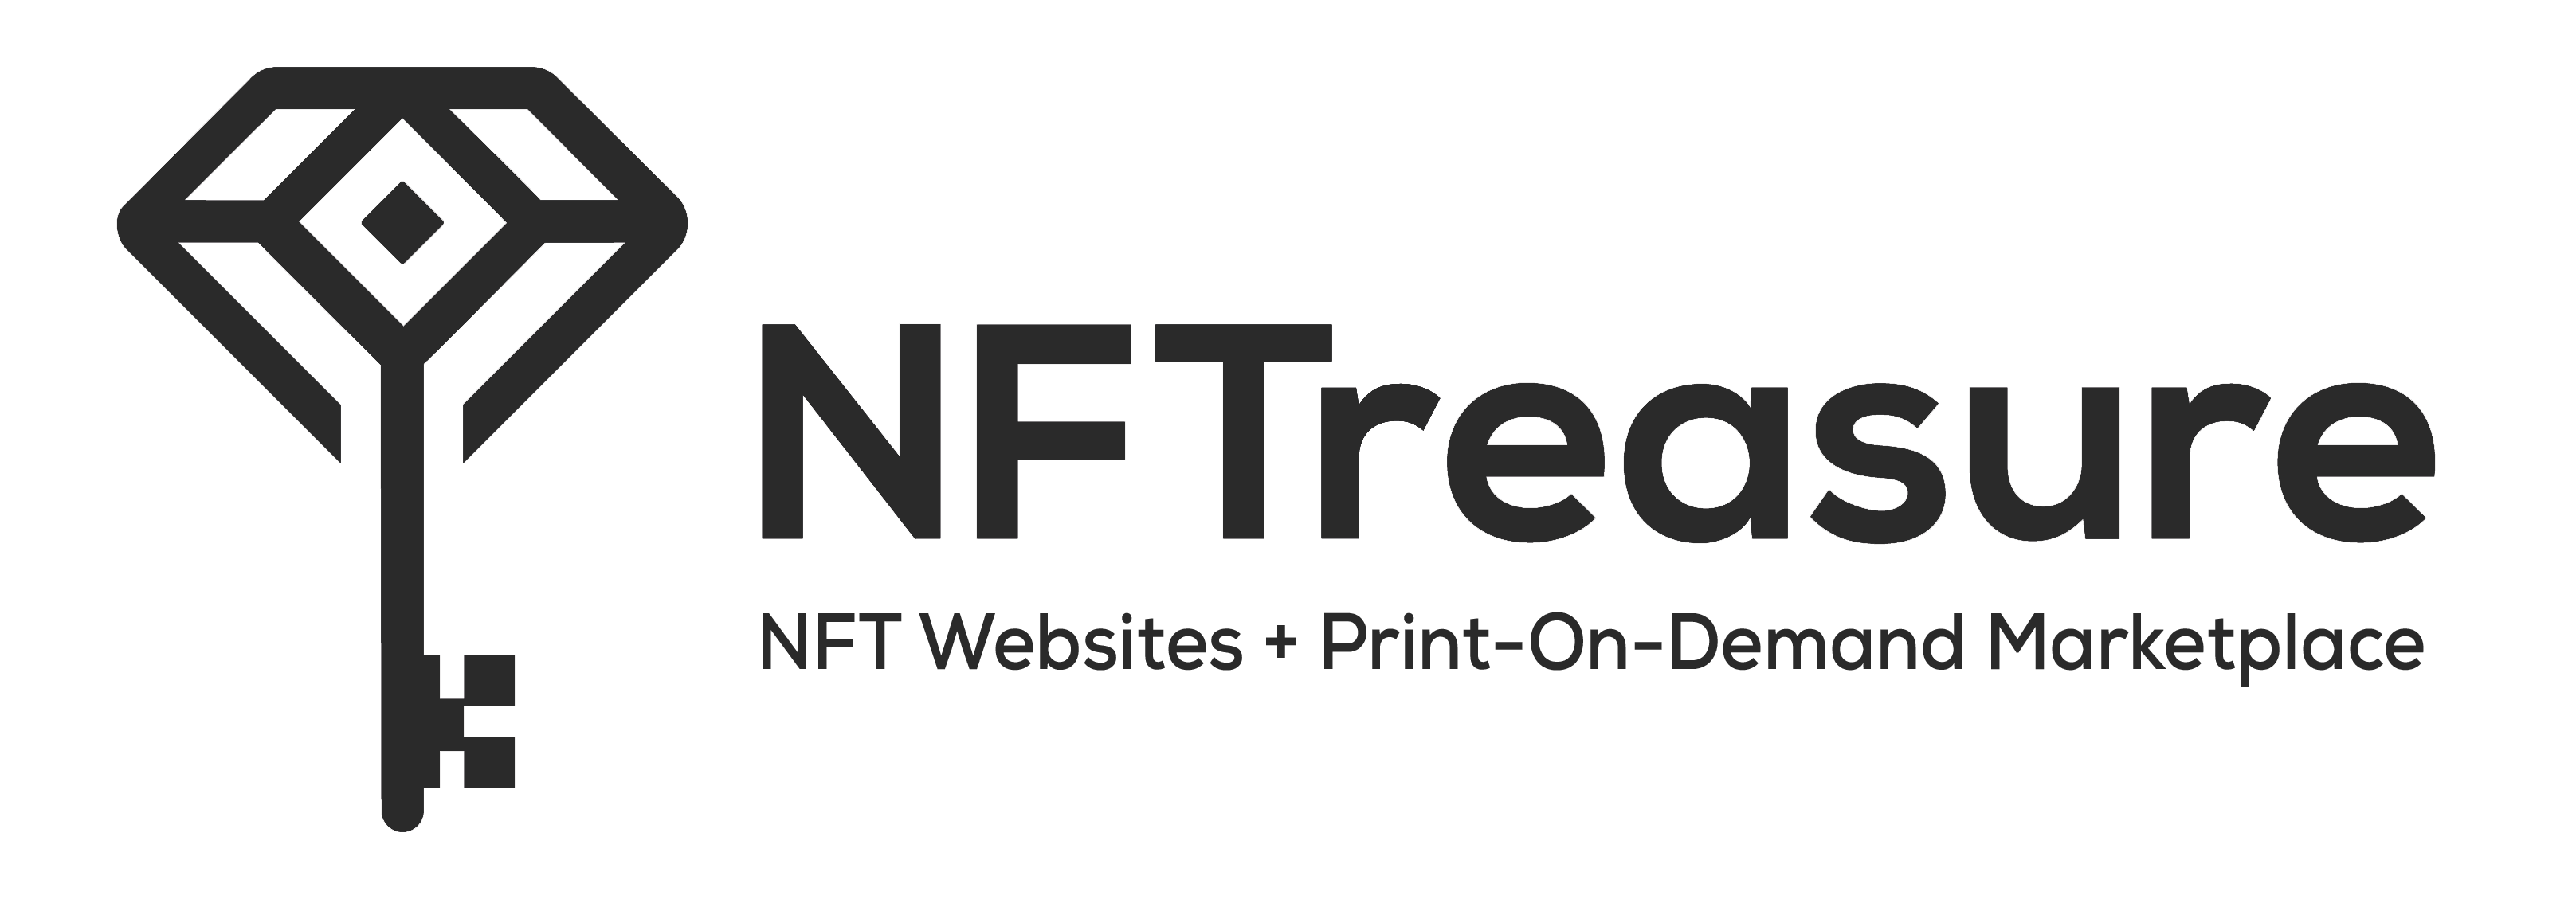 NFT Websites, Marketing, and Print on Demand NFT Marketplace on AVAX